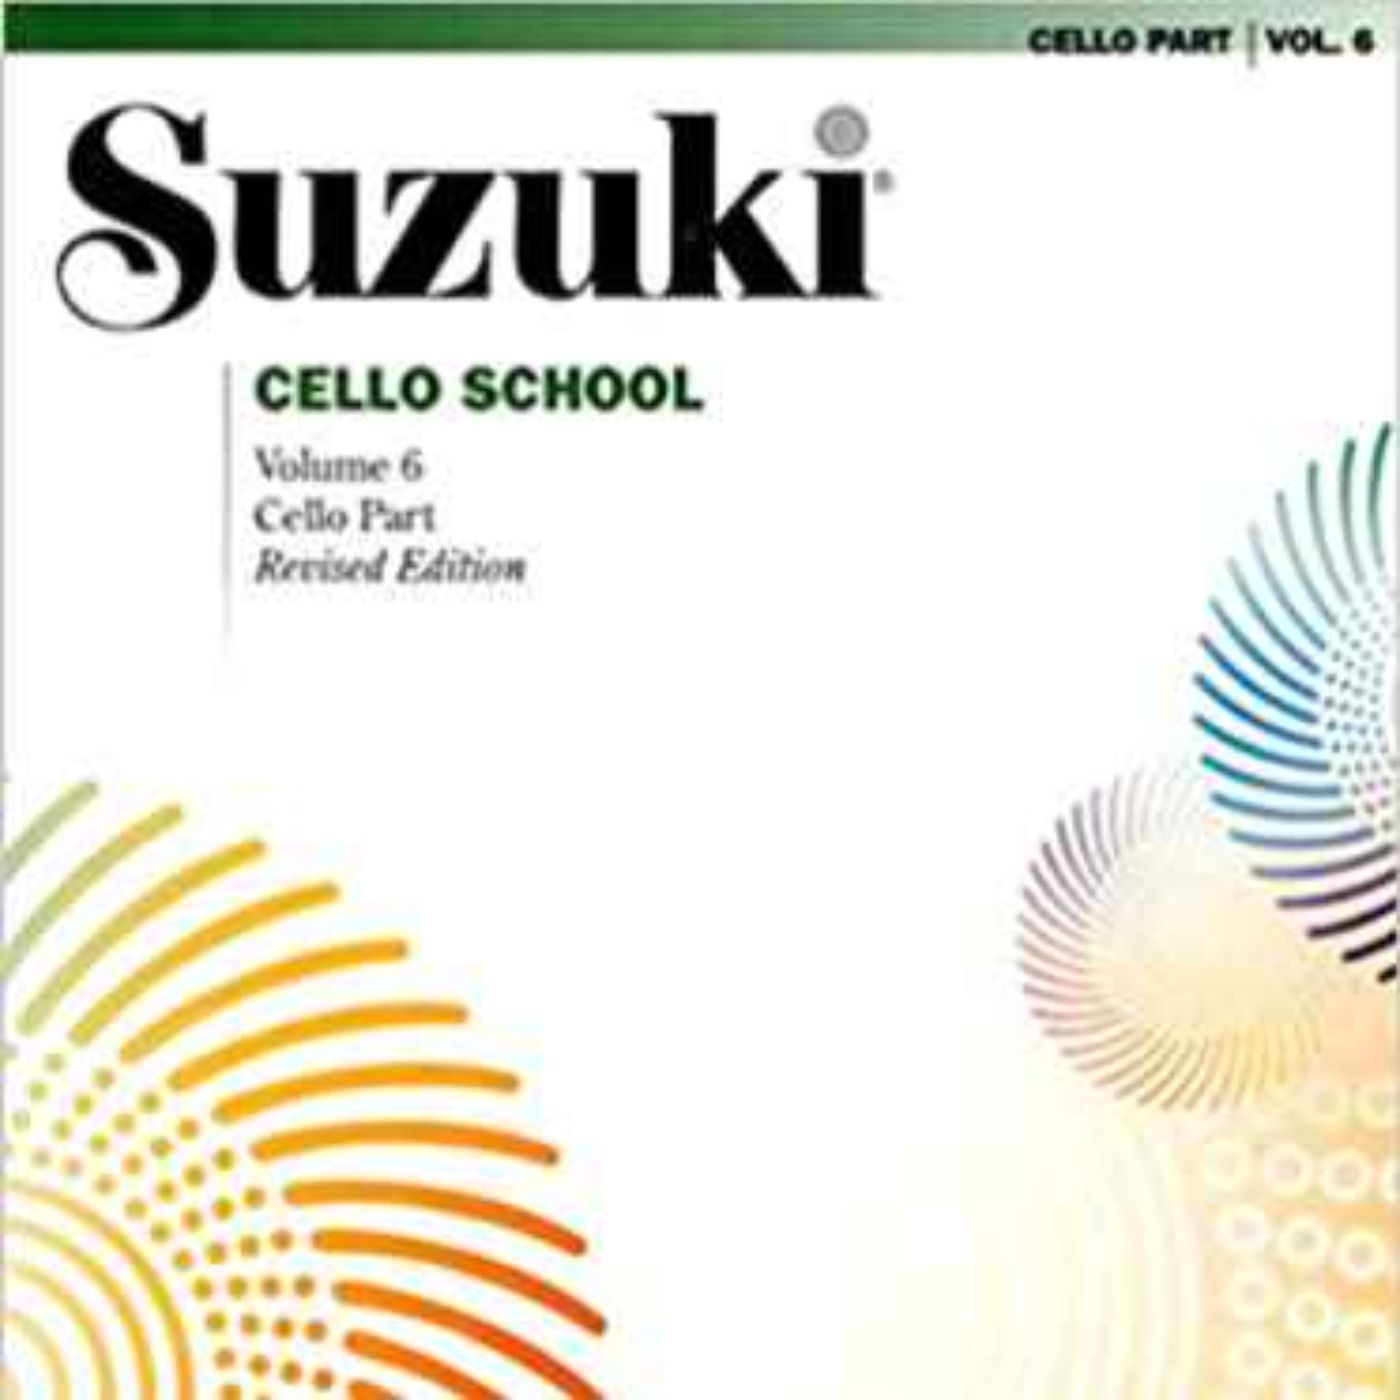 Suzuki French Folk Song Bk 1 bars 6 to 12 Practice Buddy